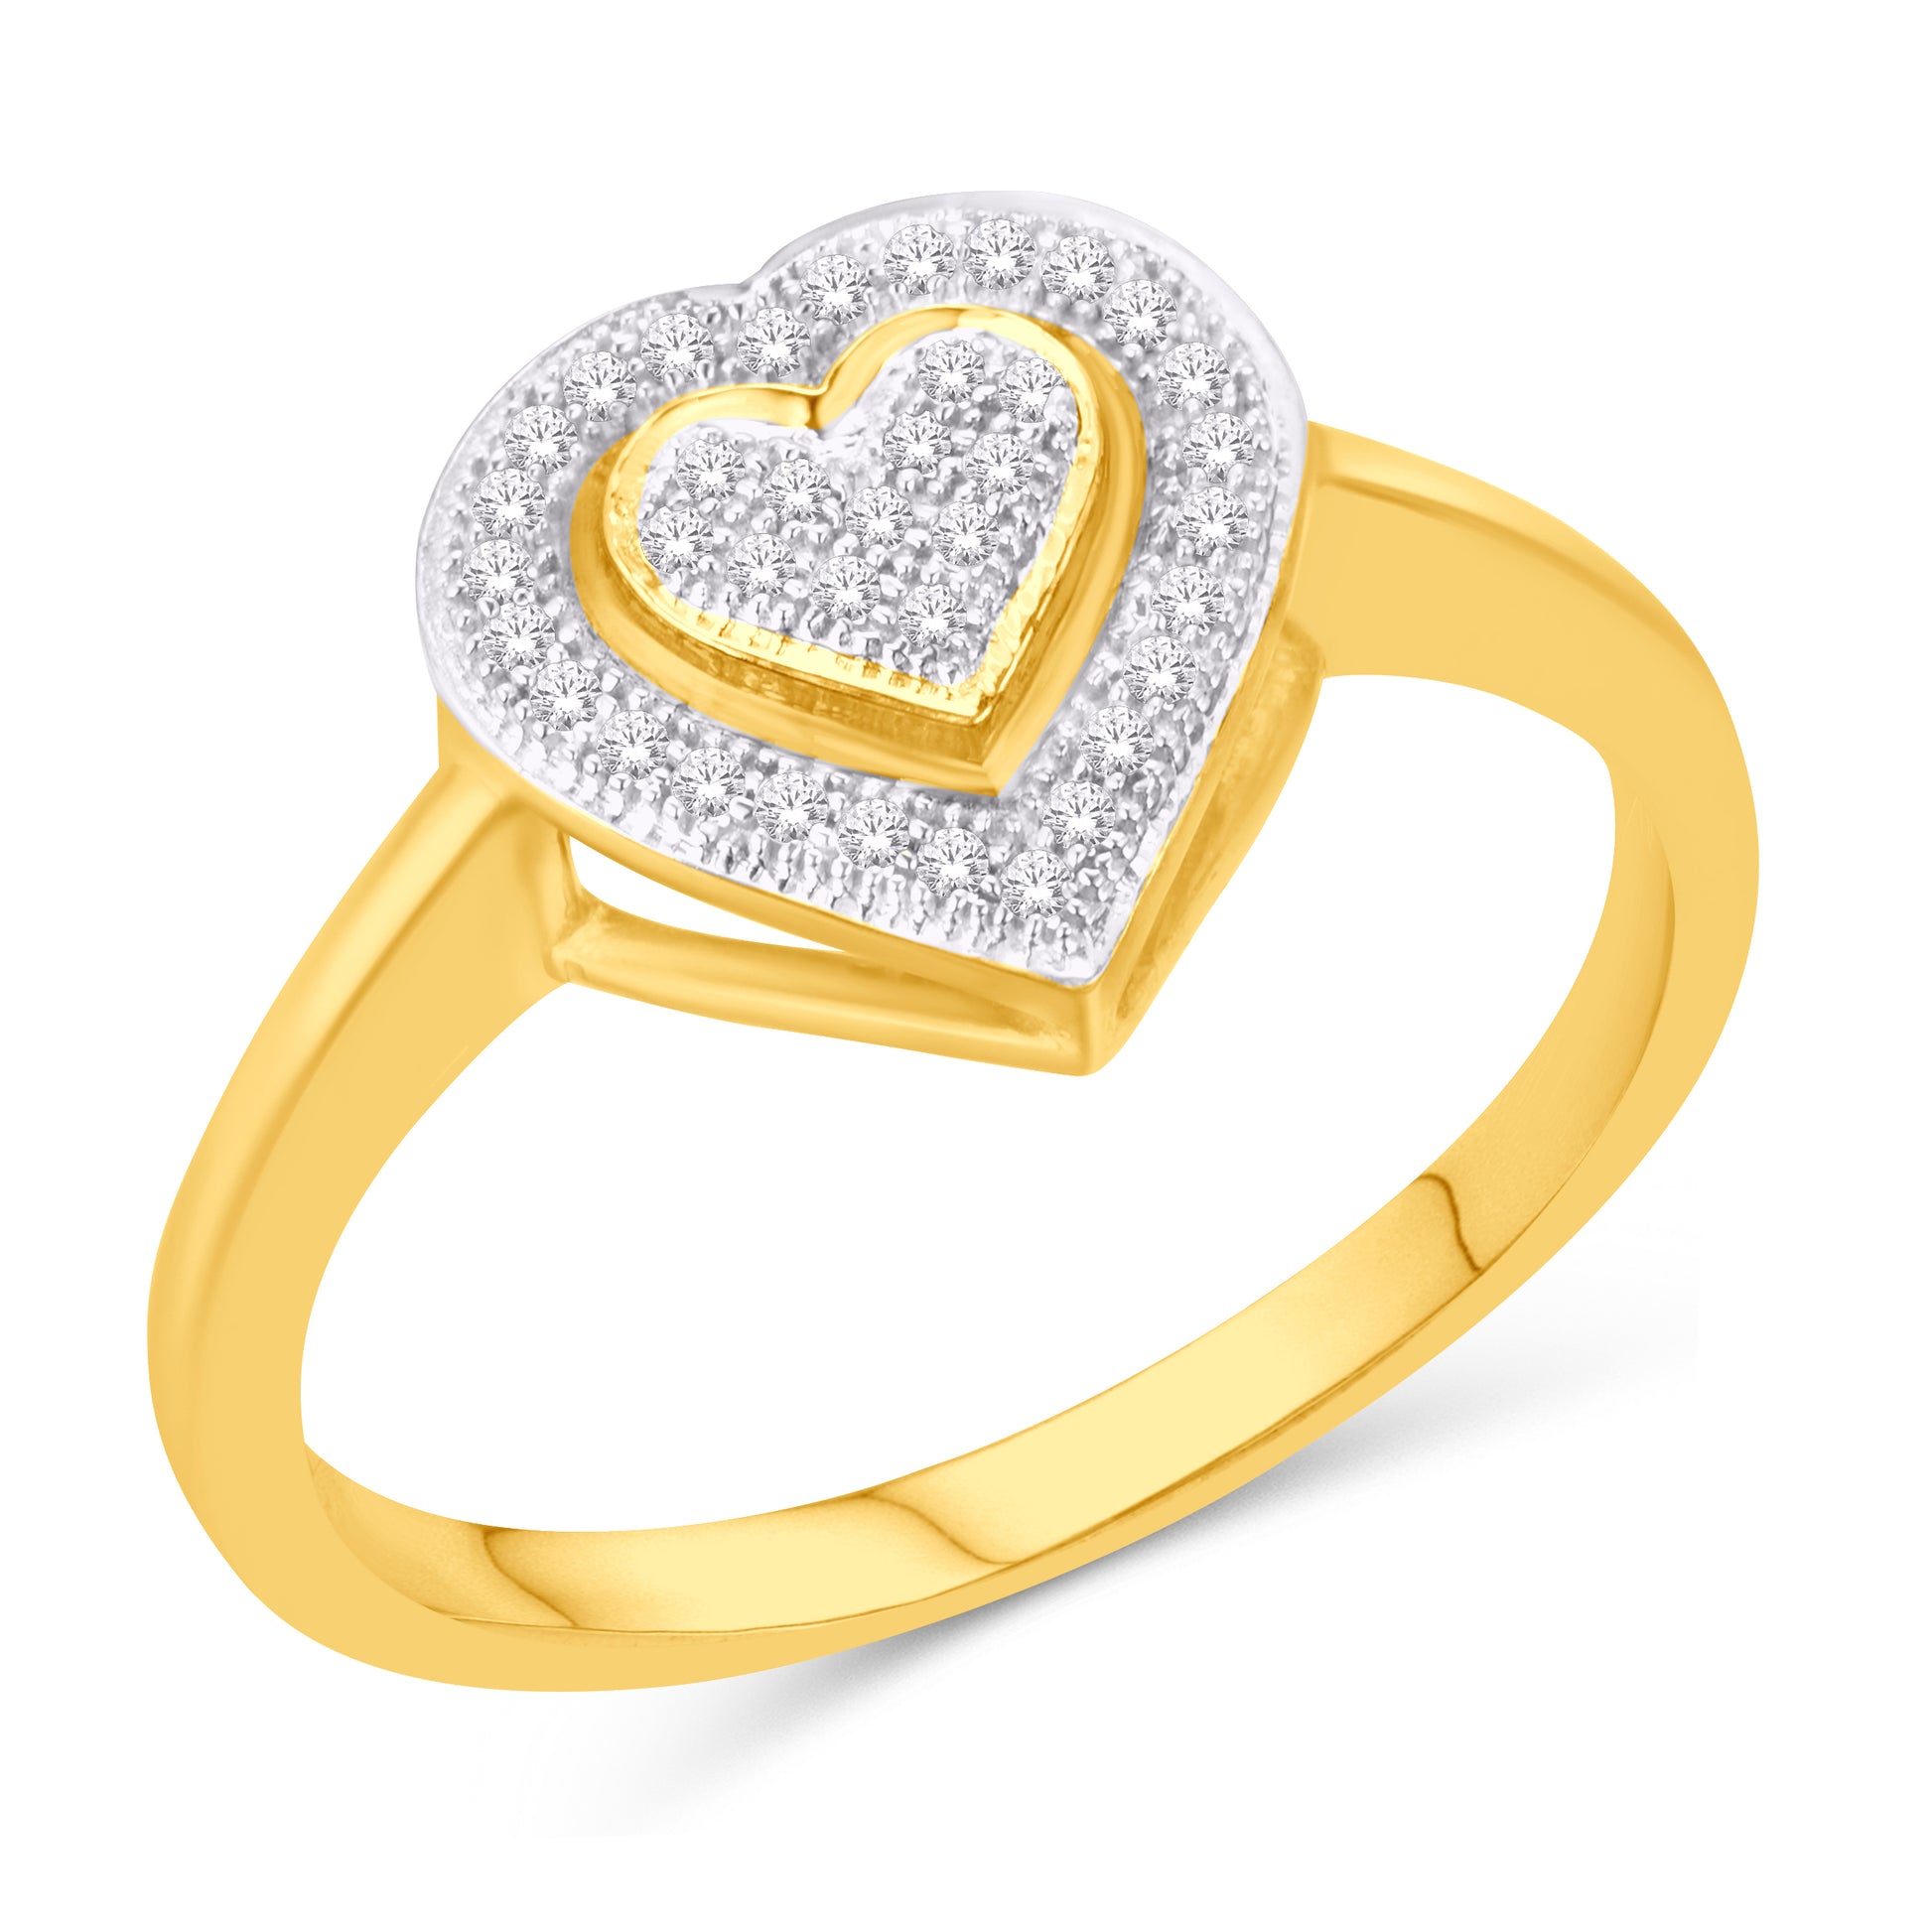 10 Karat yellow gold and diamonds ladies ring